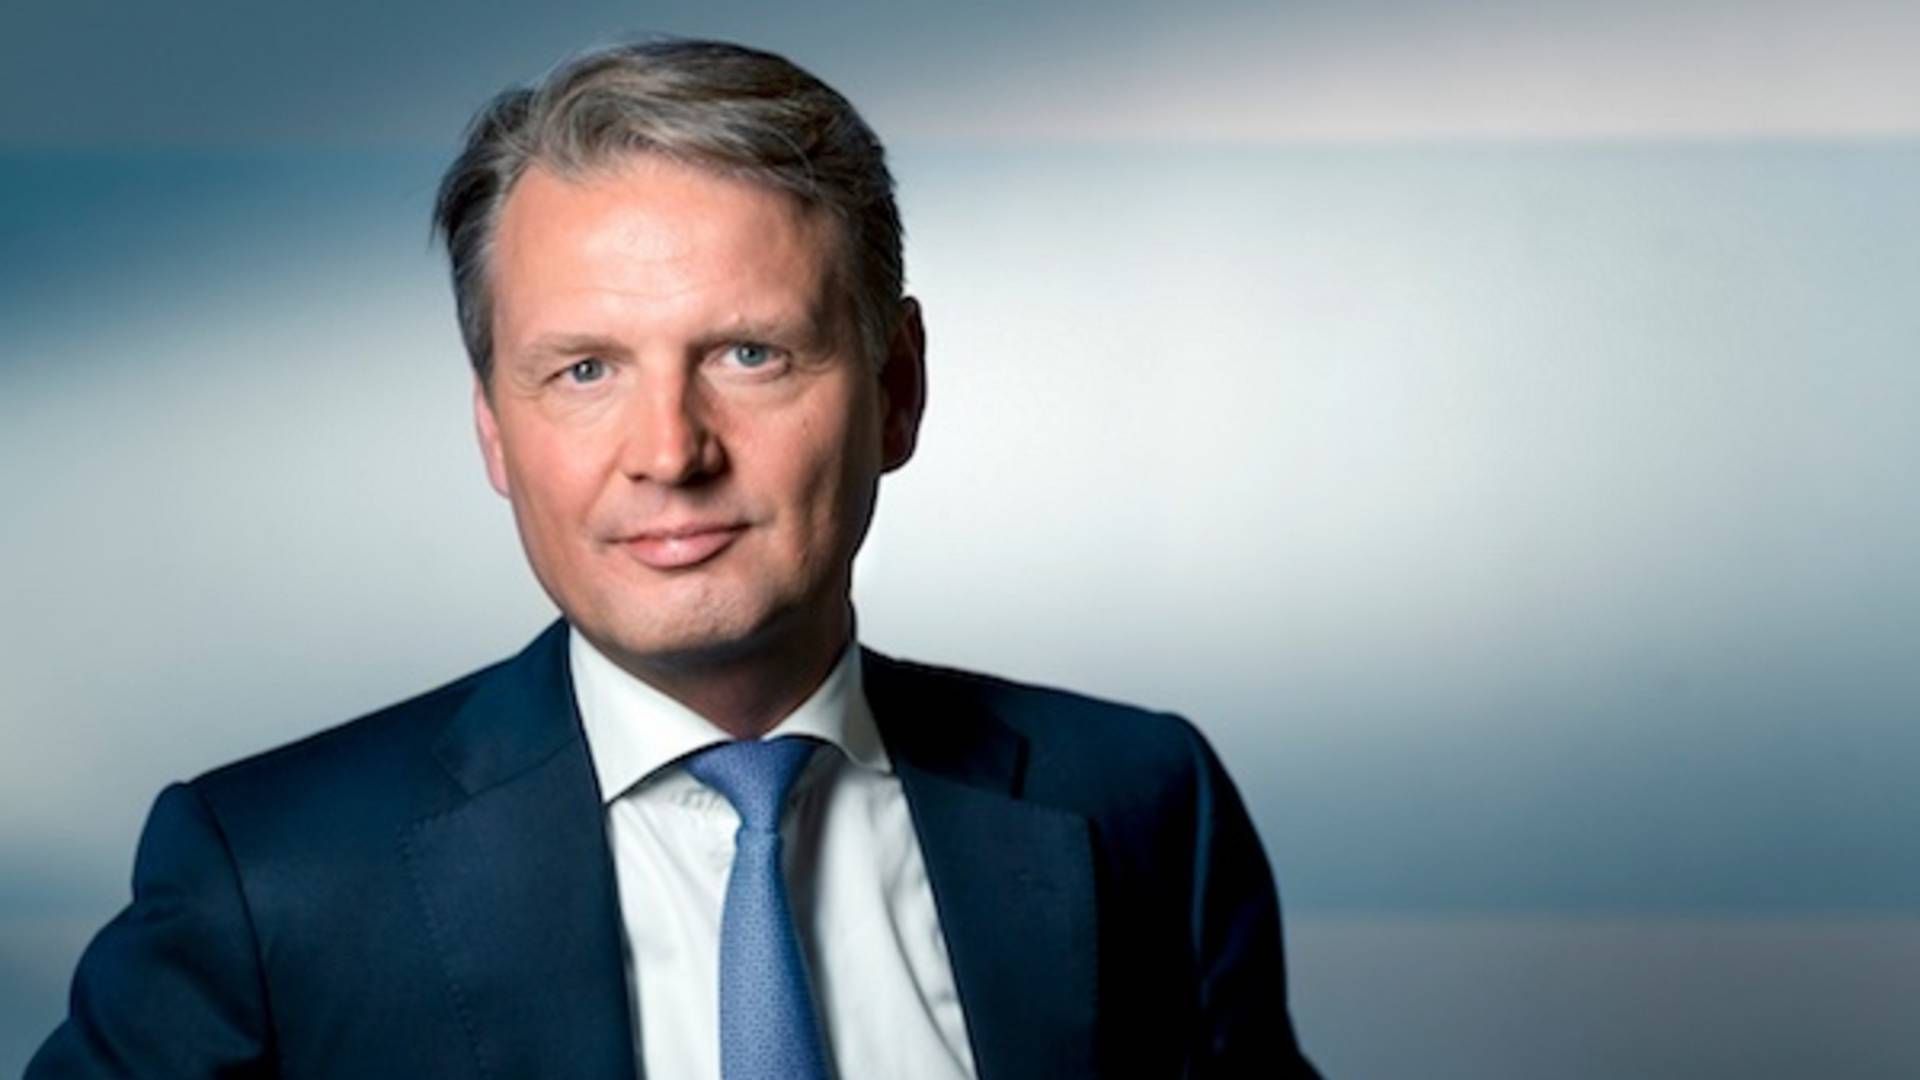 Henrik Ramskov is managing partner at Navigare Capital Partners | Photo: Navigare Capital Partners